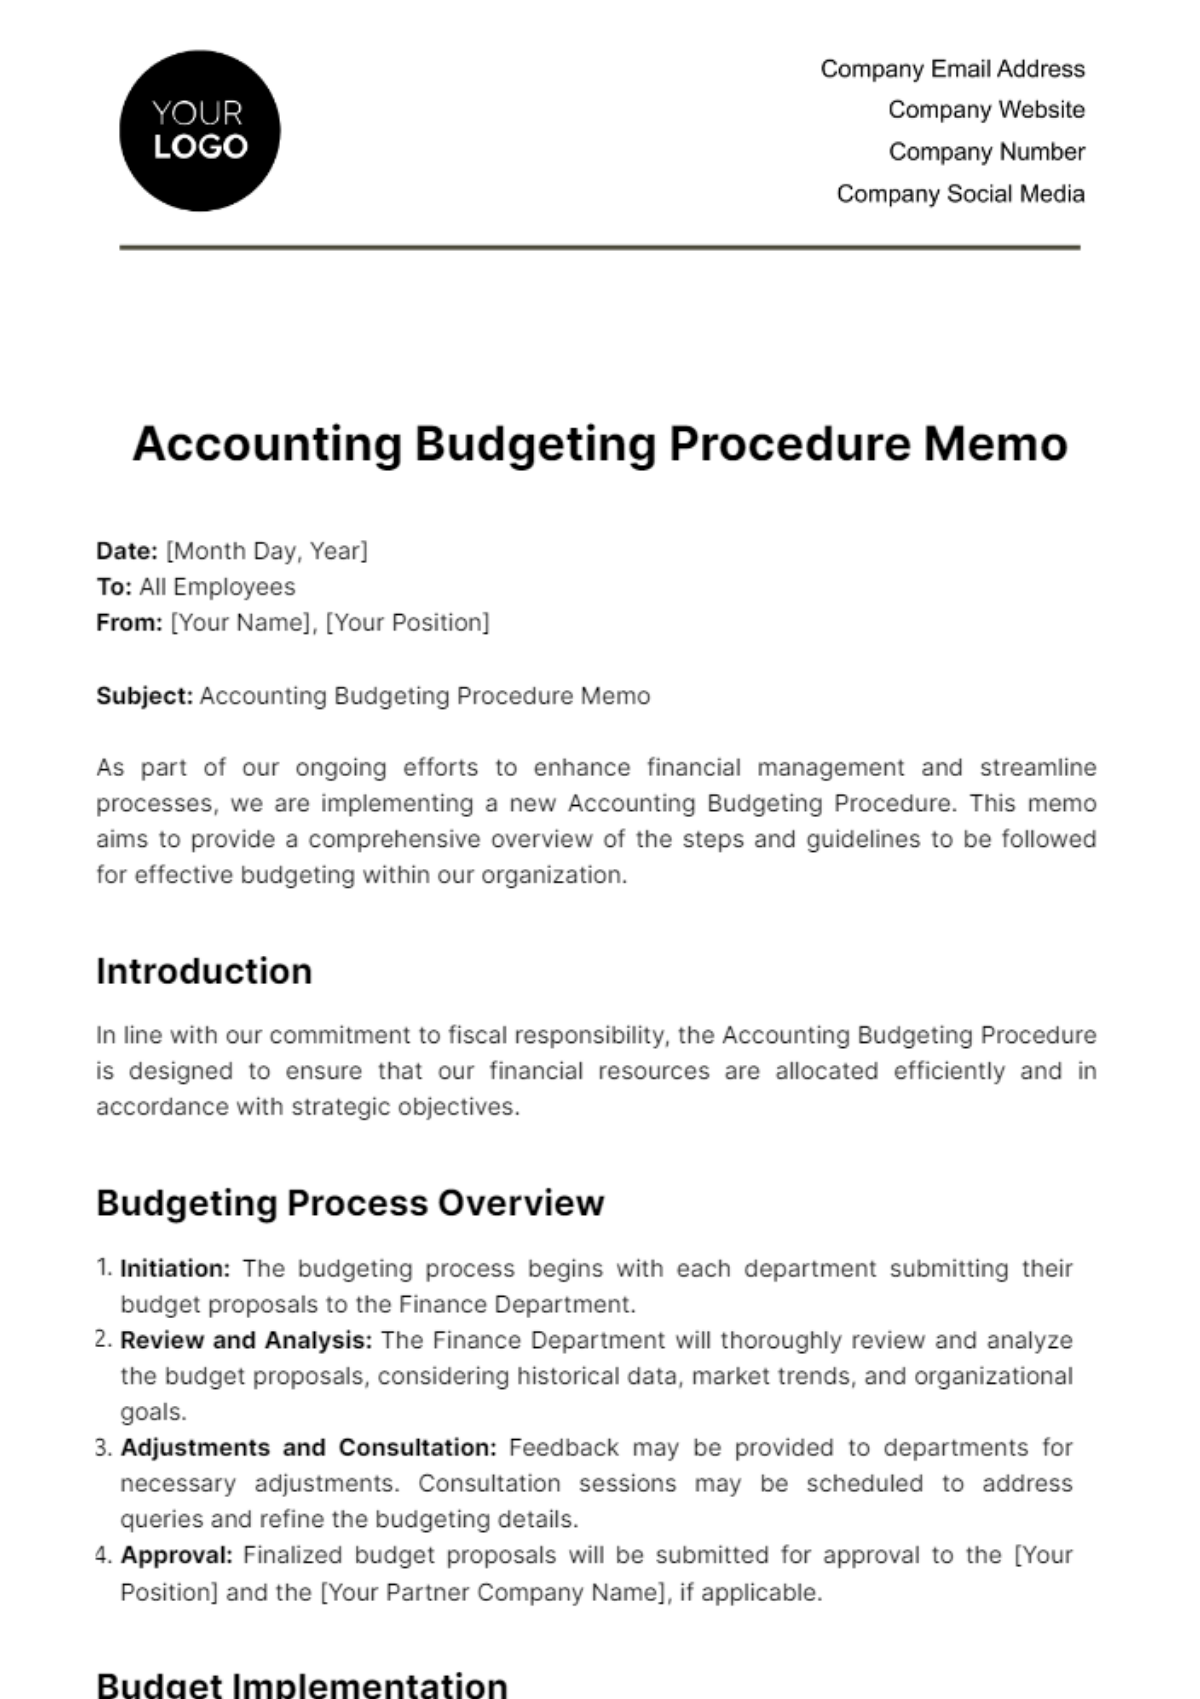 Accounting Budgeting Procedure Memo Template